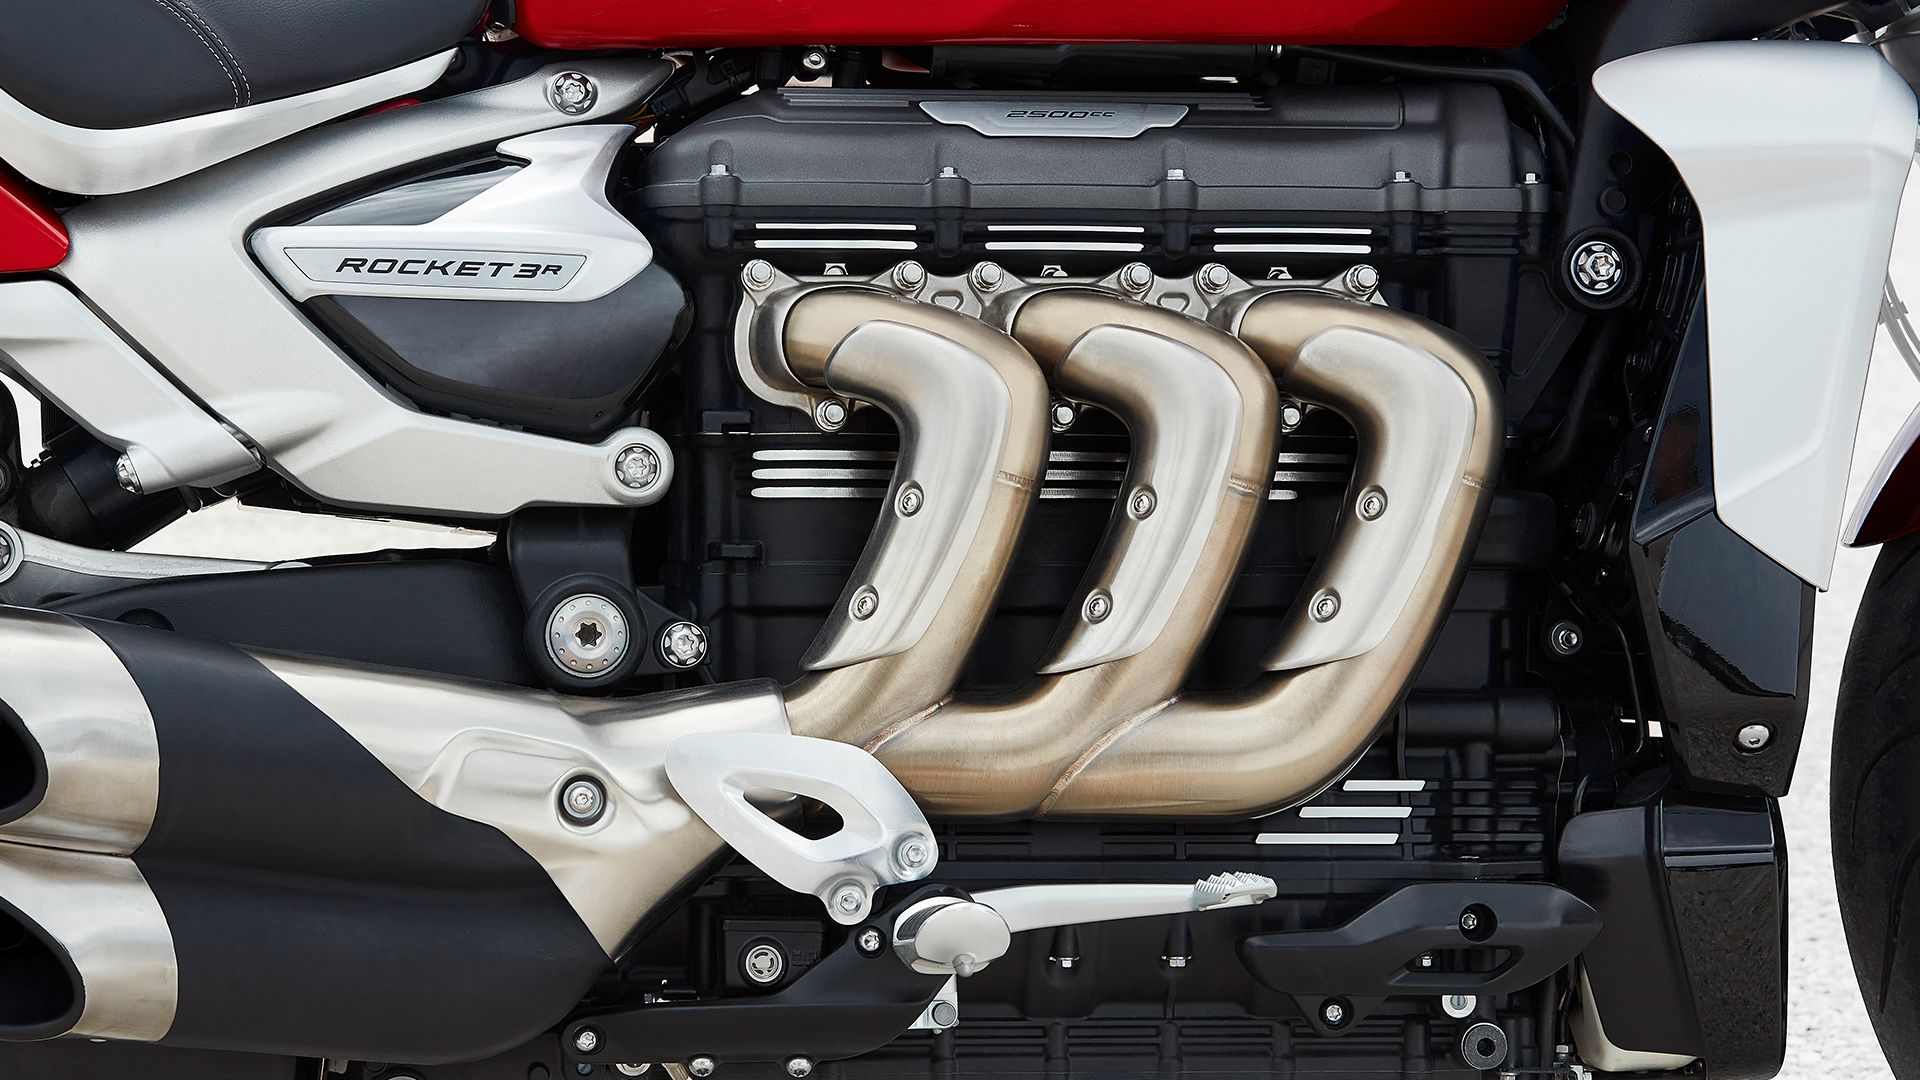 Triumph Rocket 3 engine close-up